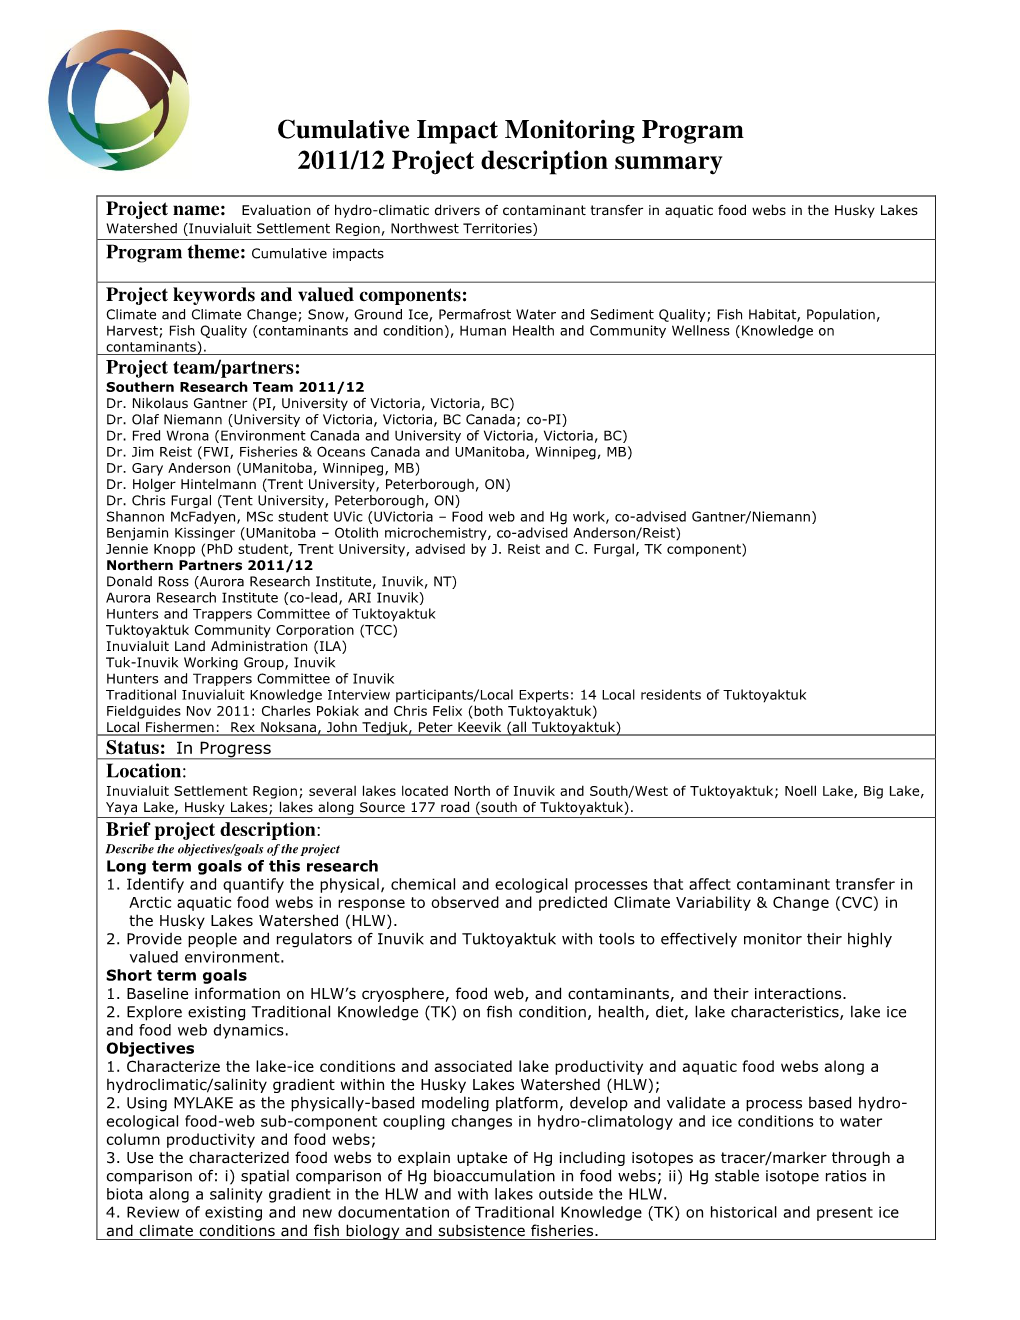 Cumulative Impact Monitoring Program 2011/12 Project Description Summary